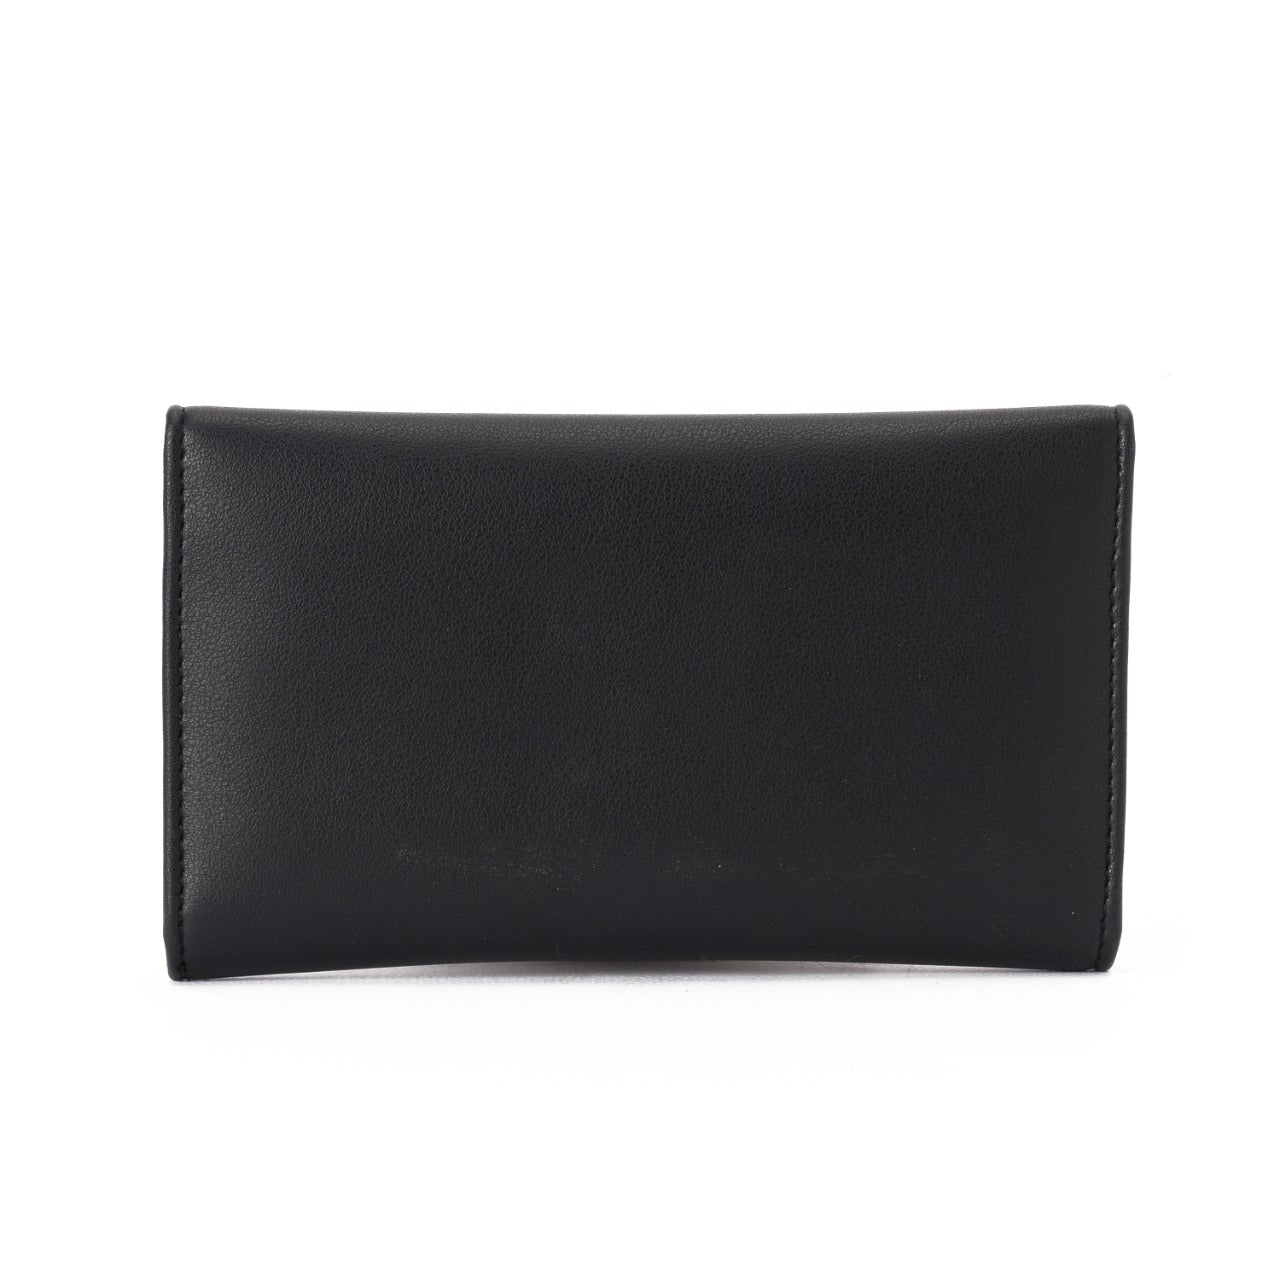 Vintage Black Wallet - code 523